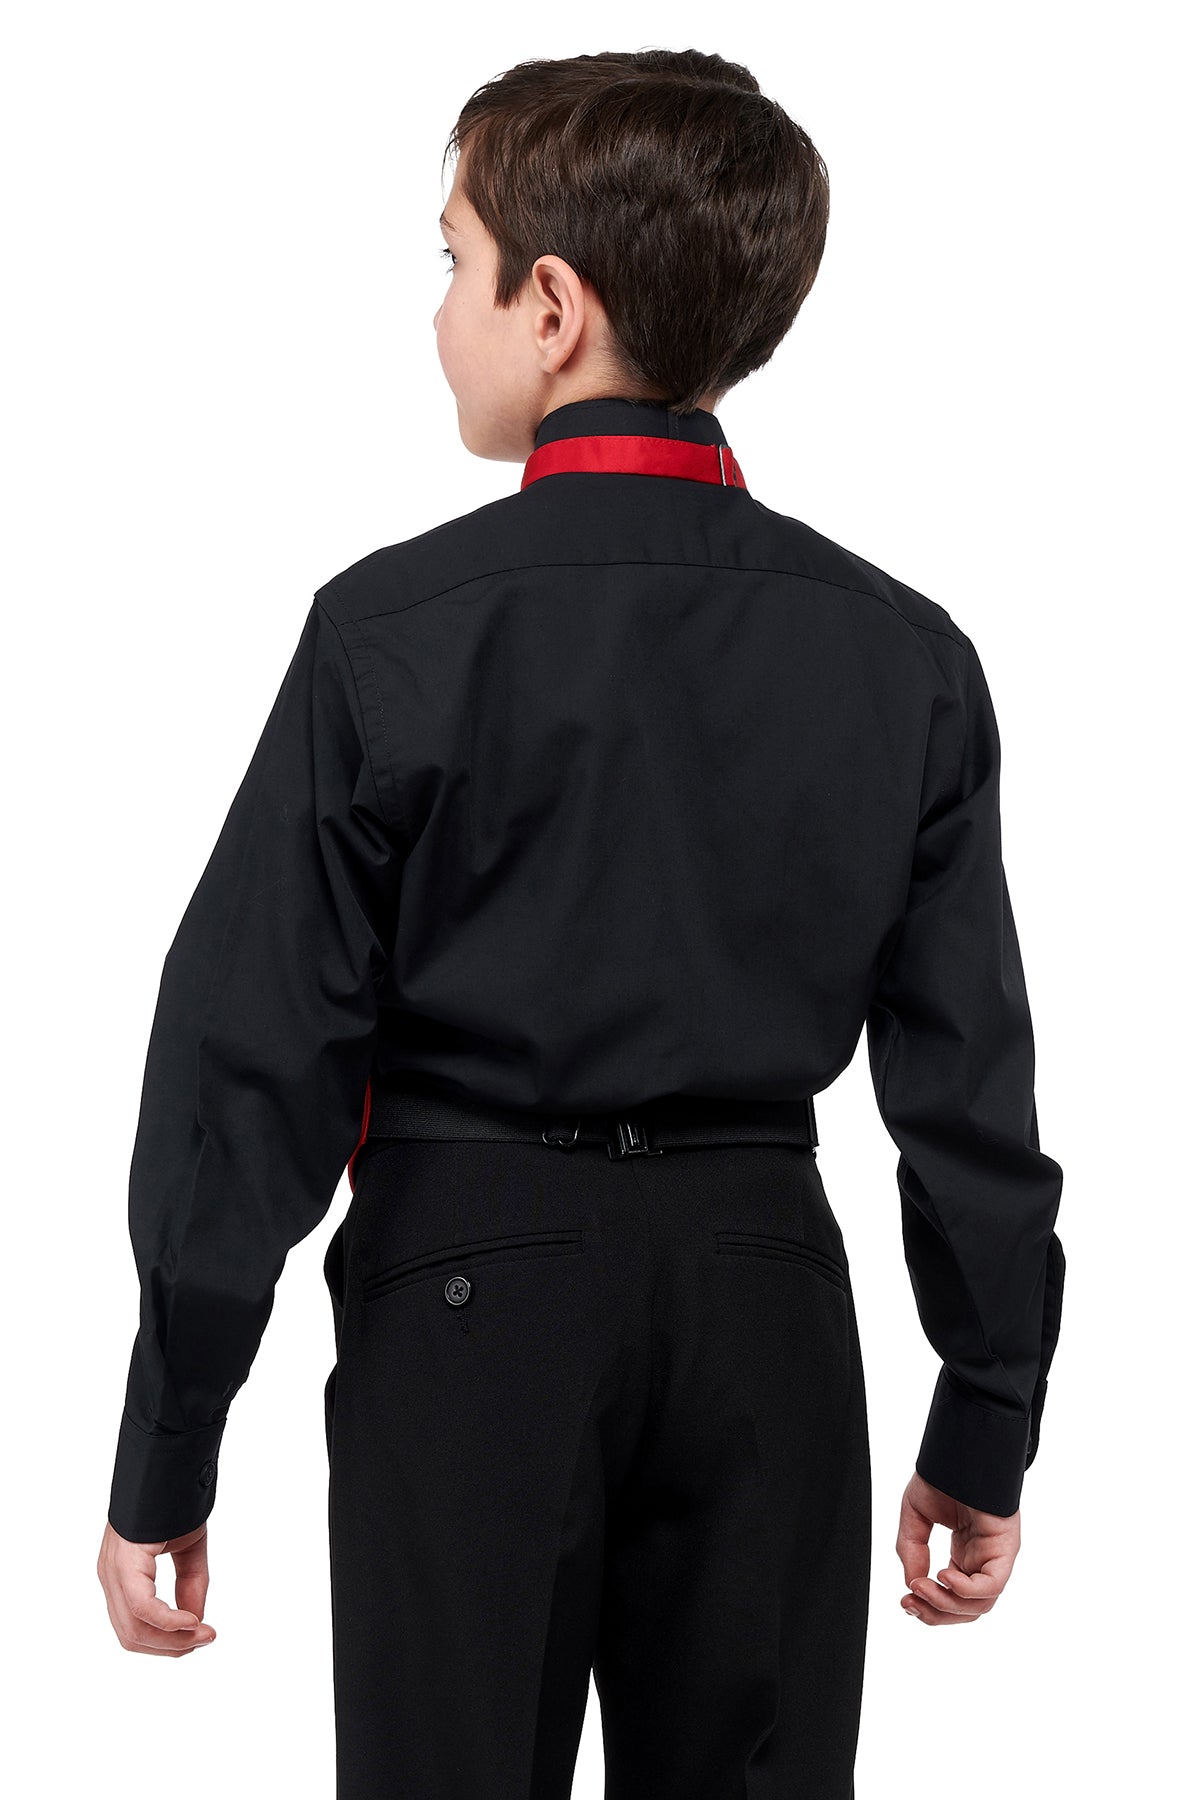 701-B - Black Wing Tip Collar Pleated Tuxedo Shirt- Boys